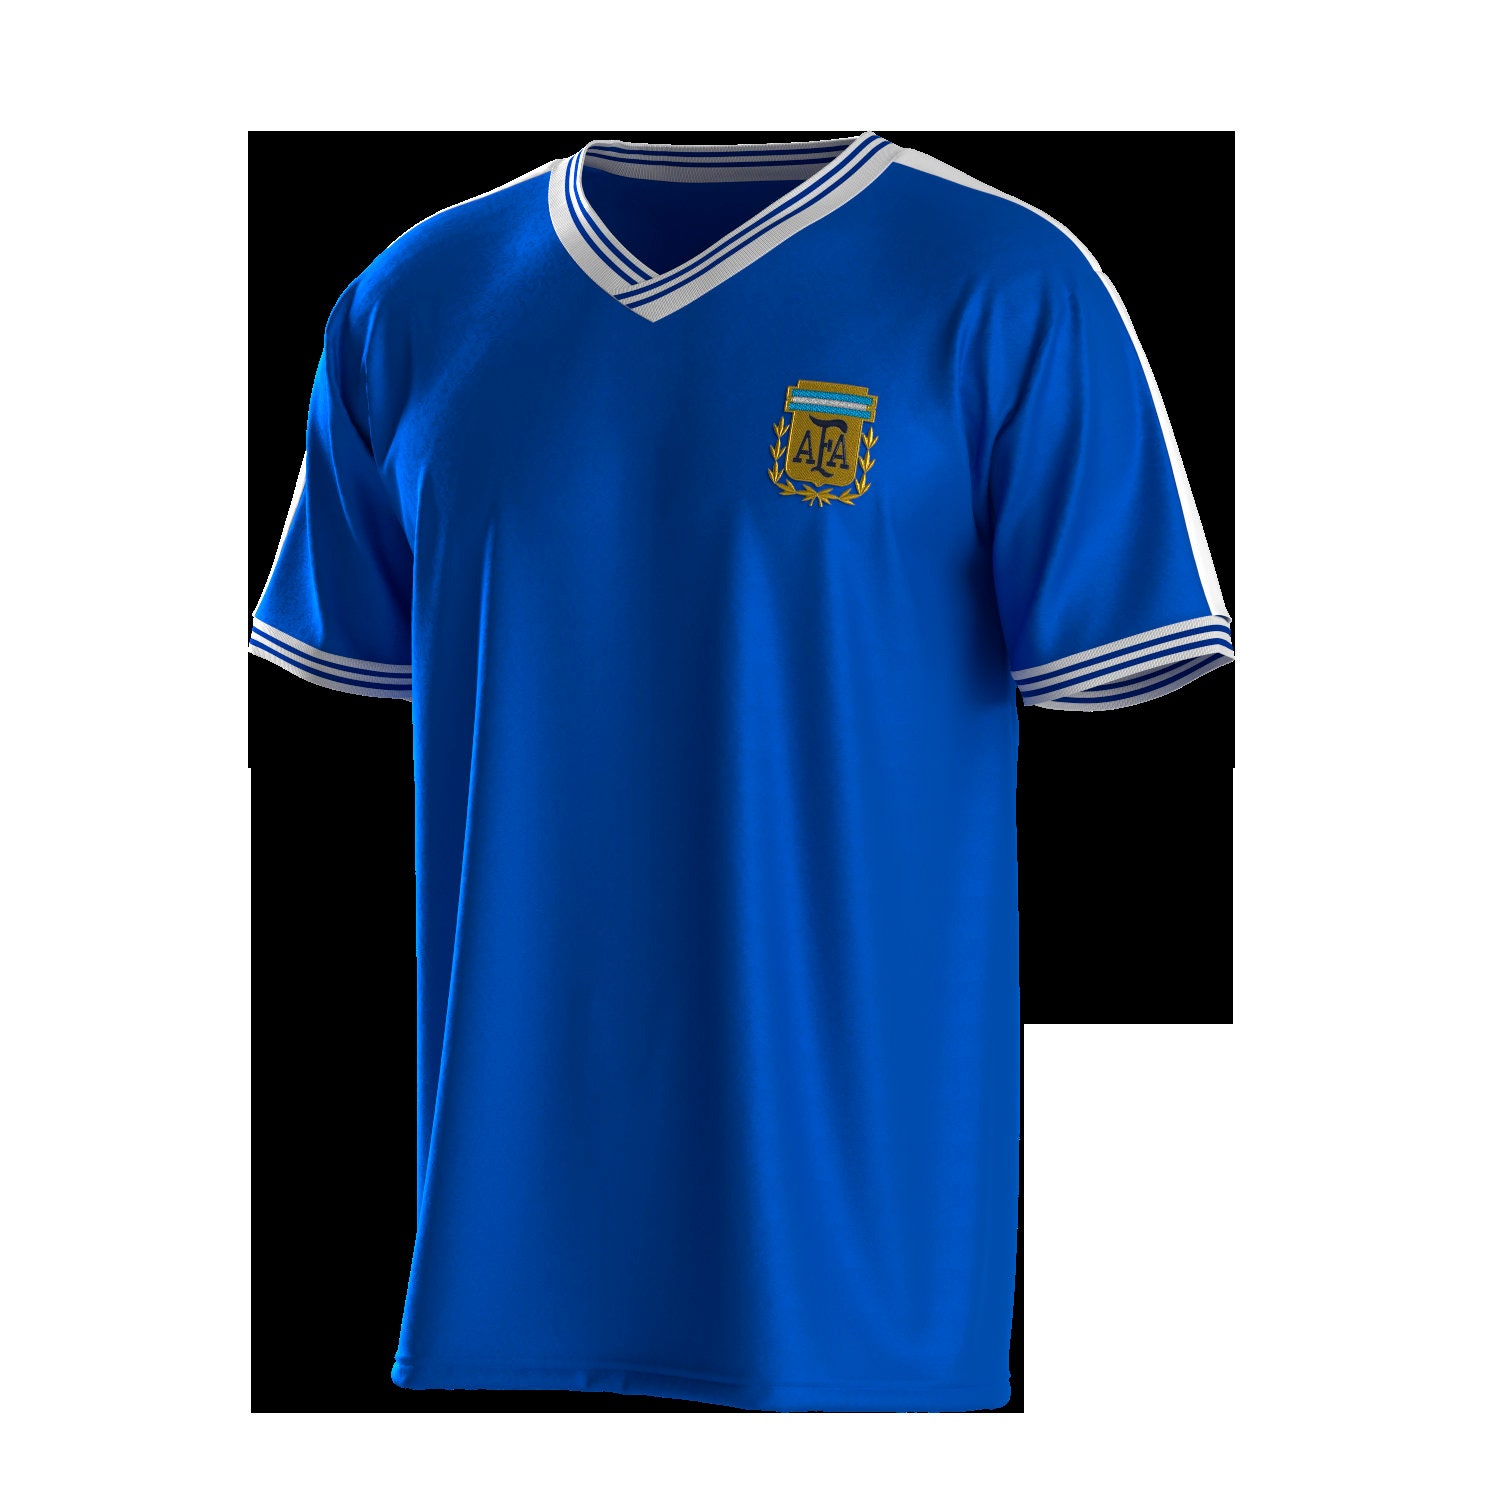 Classic World Cup shirts: Adidas Retro Jersey range - Retro to Go